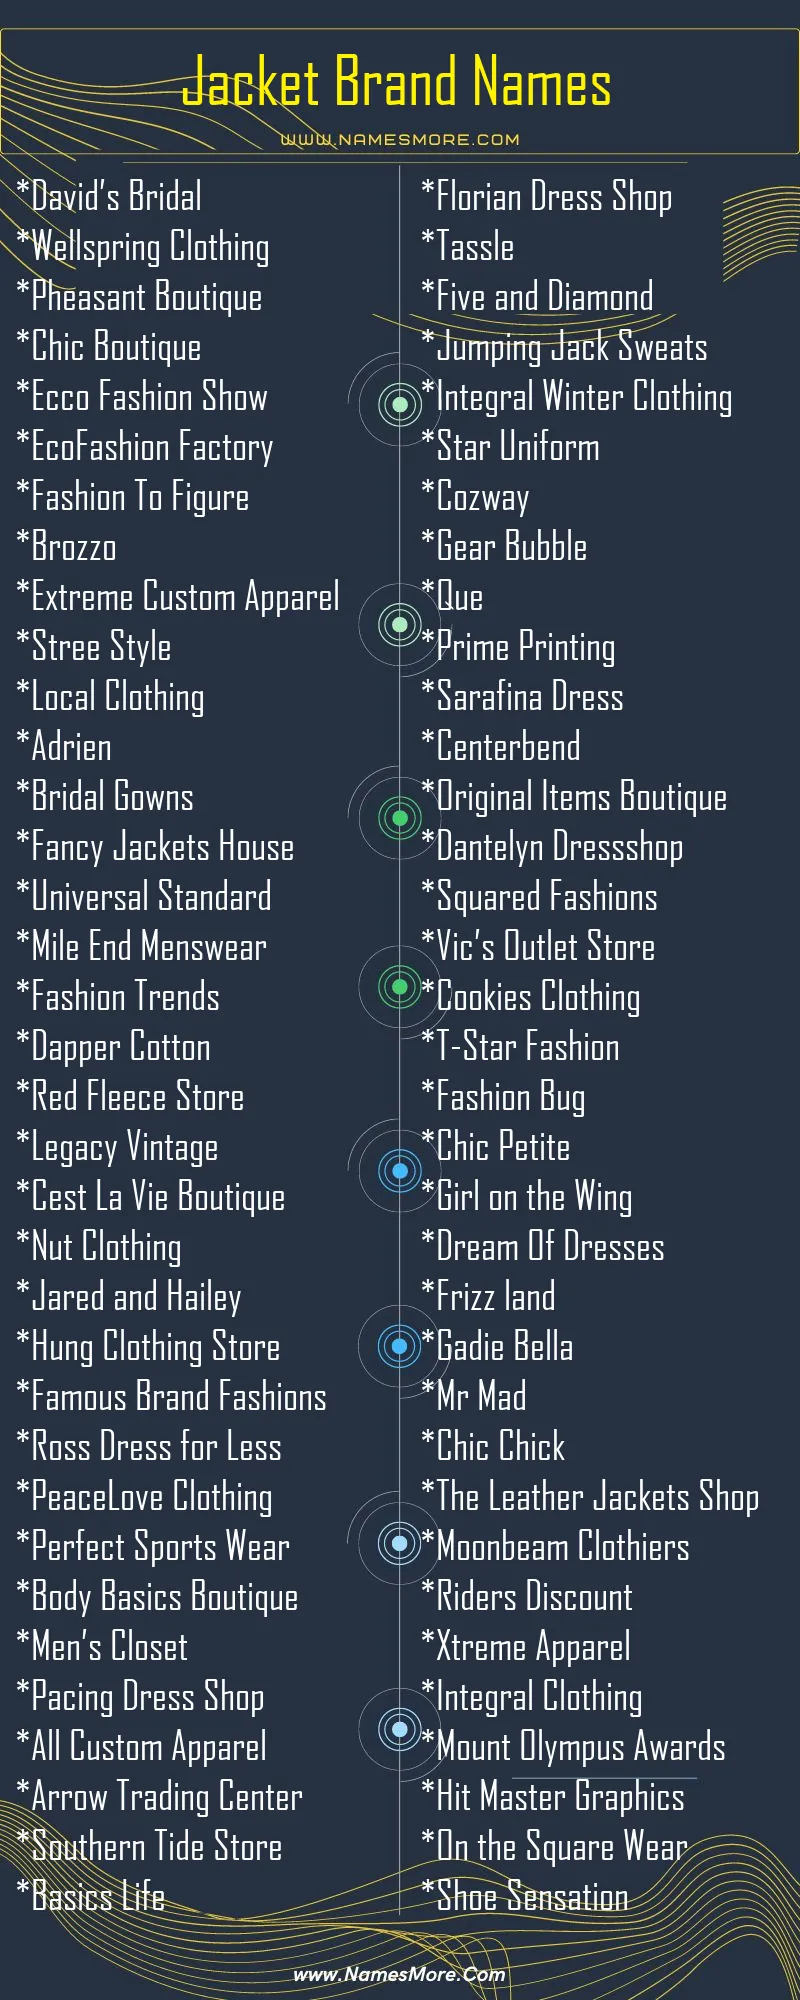 Jacket Brand Names List Infographic